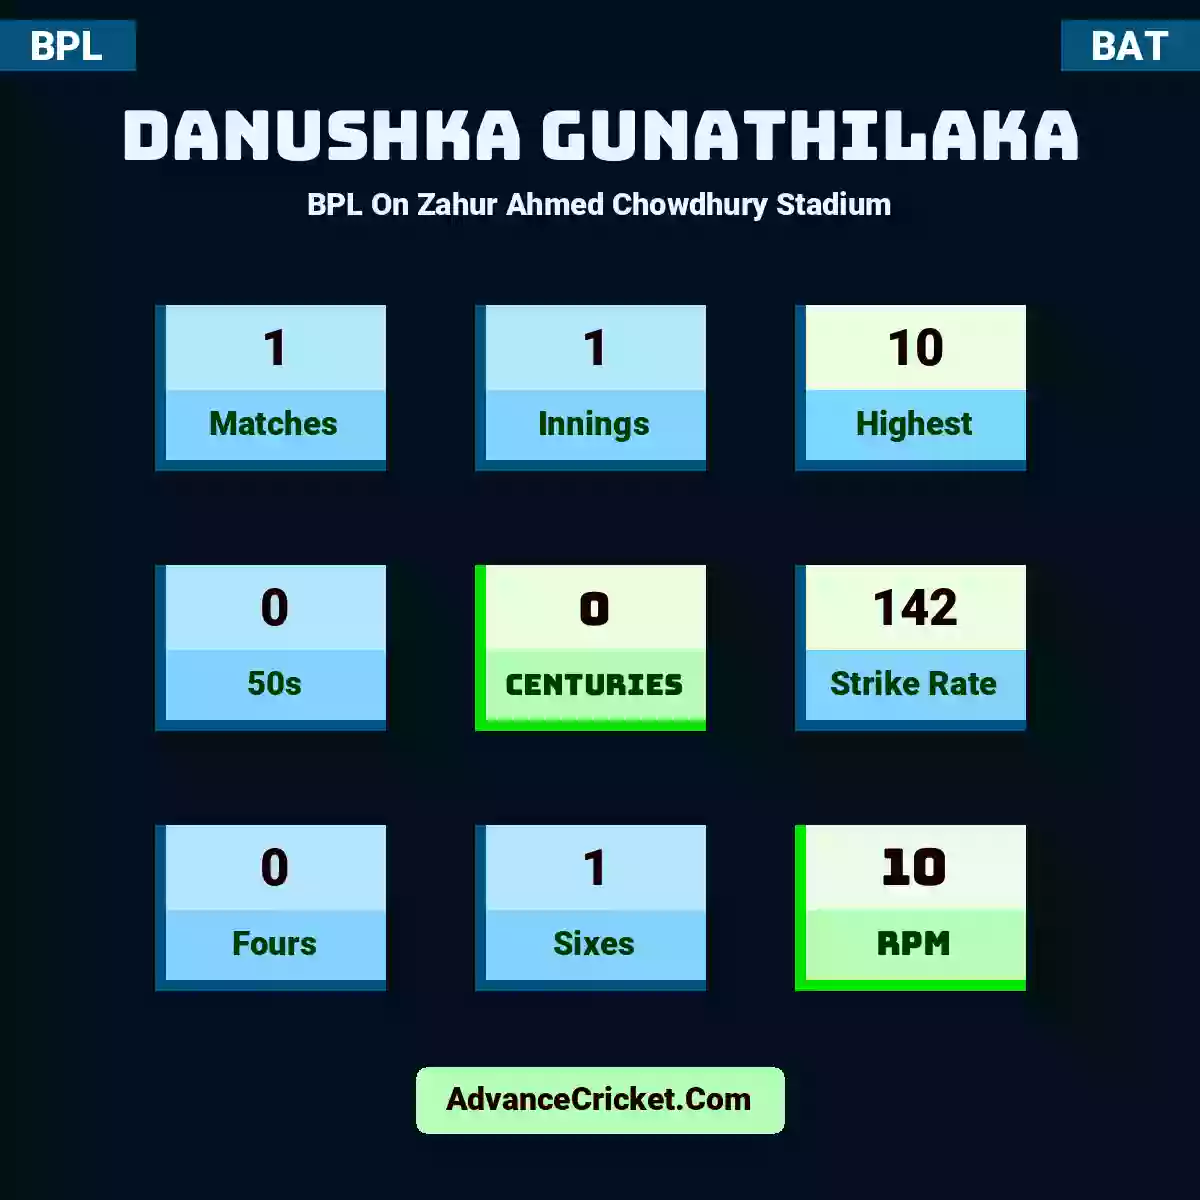 Danushka Gunathilaka BPL  On Zahur Ahmed Chowdhury Stadium, Danushka Gunathilaka played 1 matches, scored 10 runs as highest, 0 half-centuries, and 0 centuries, with a strike rate of 142. D.Gunathilaka hit 0 fours and 1 sixes, with an RPM of 10.